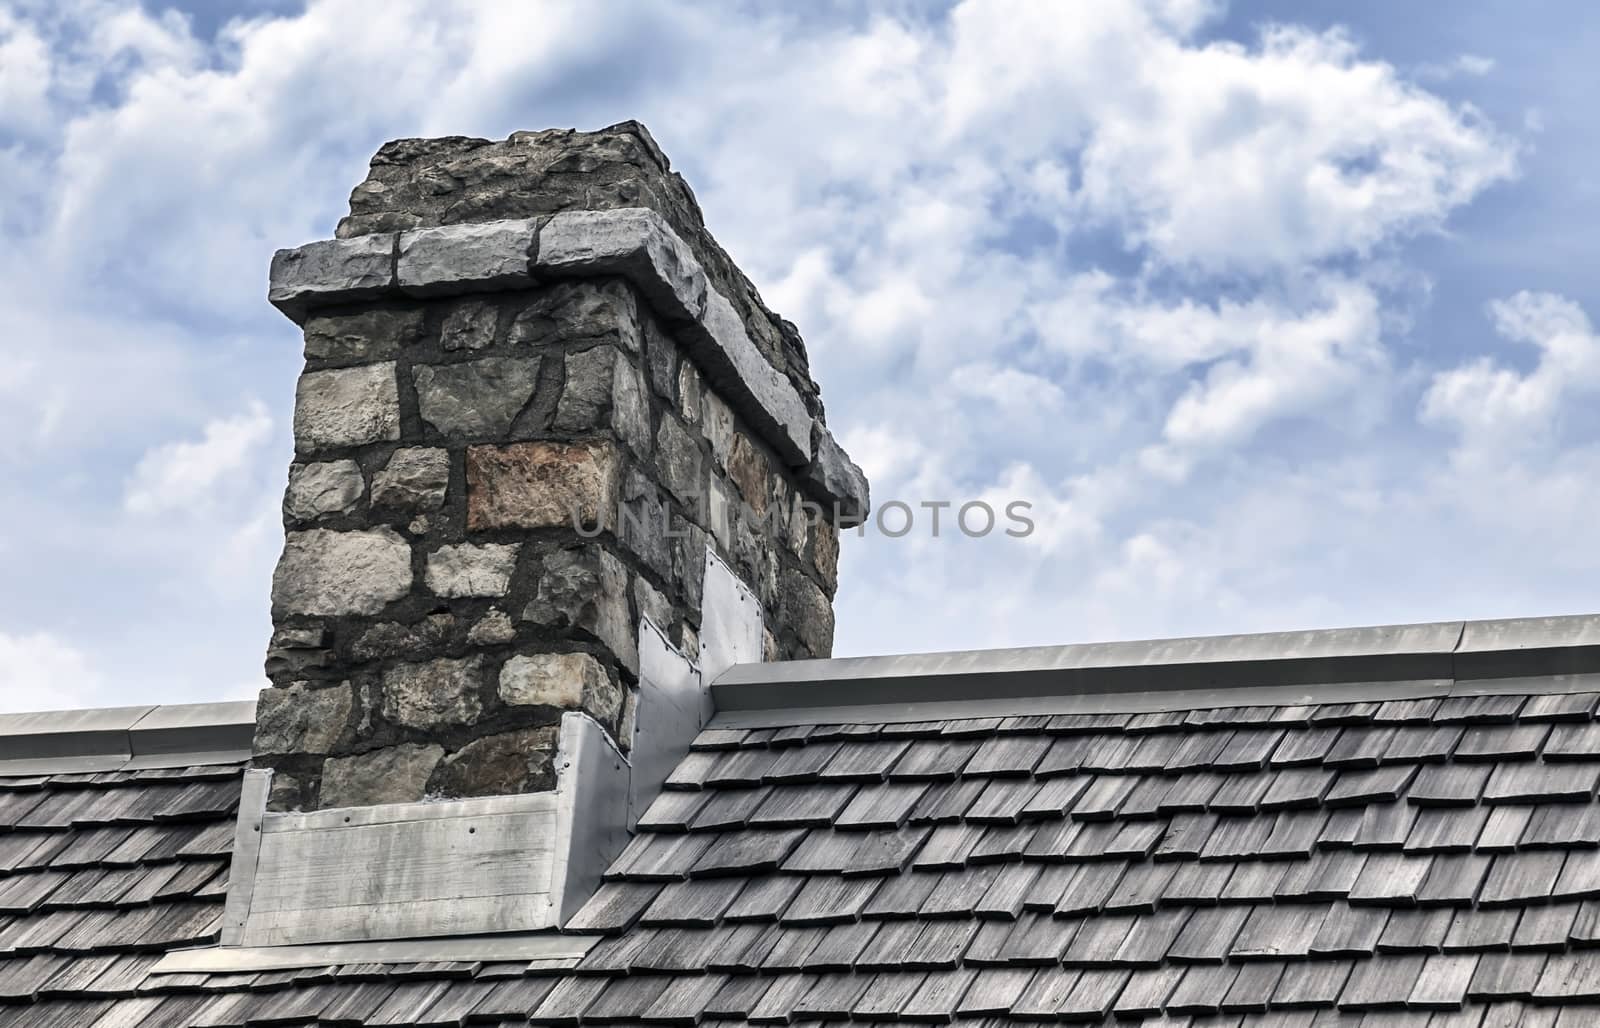 Cobblestone Chimney by fallesenphotography